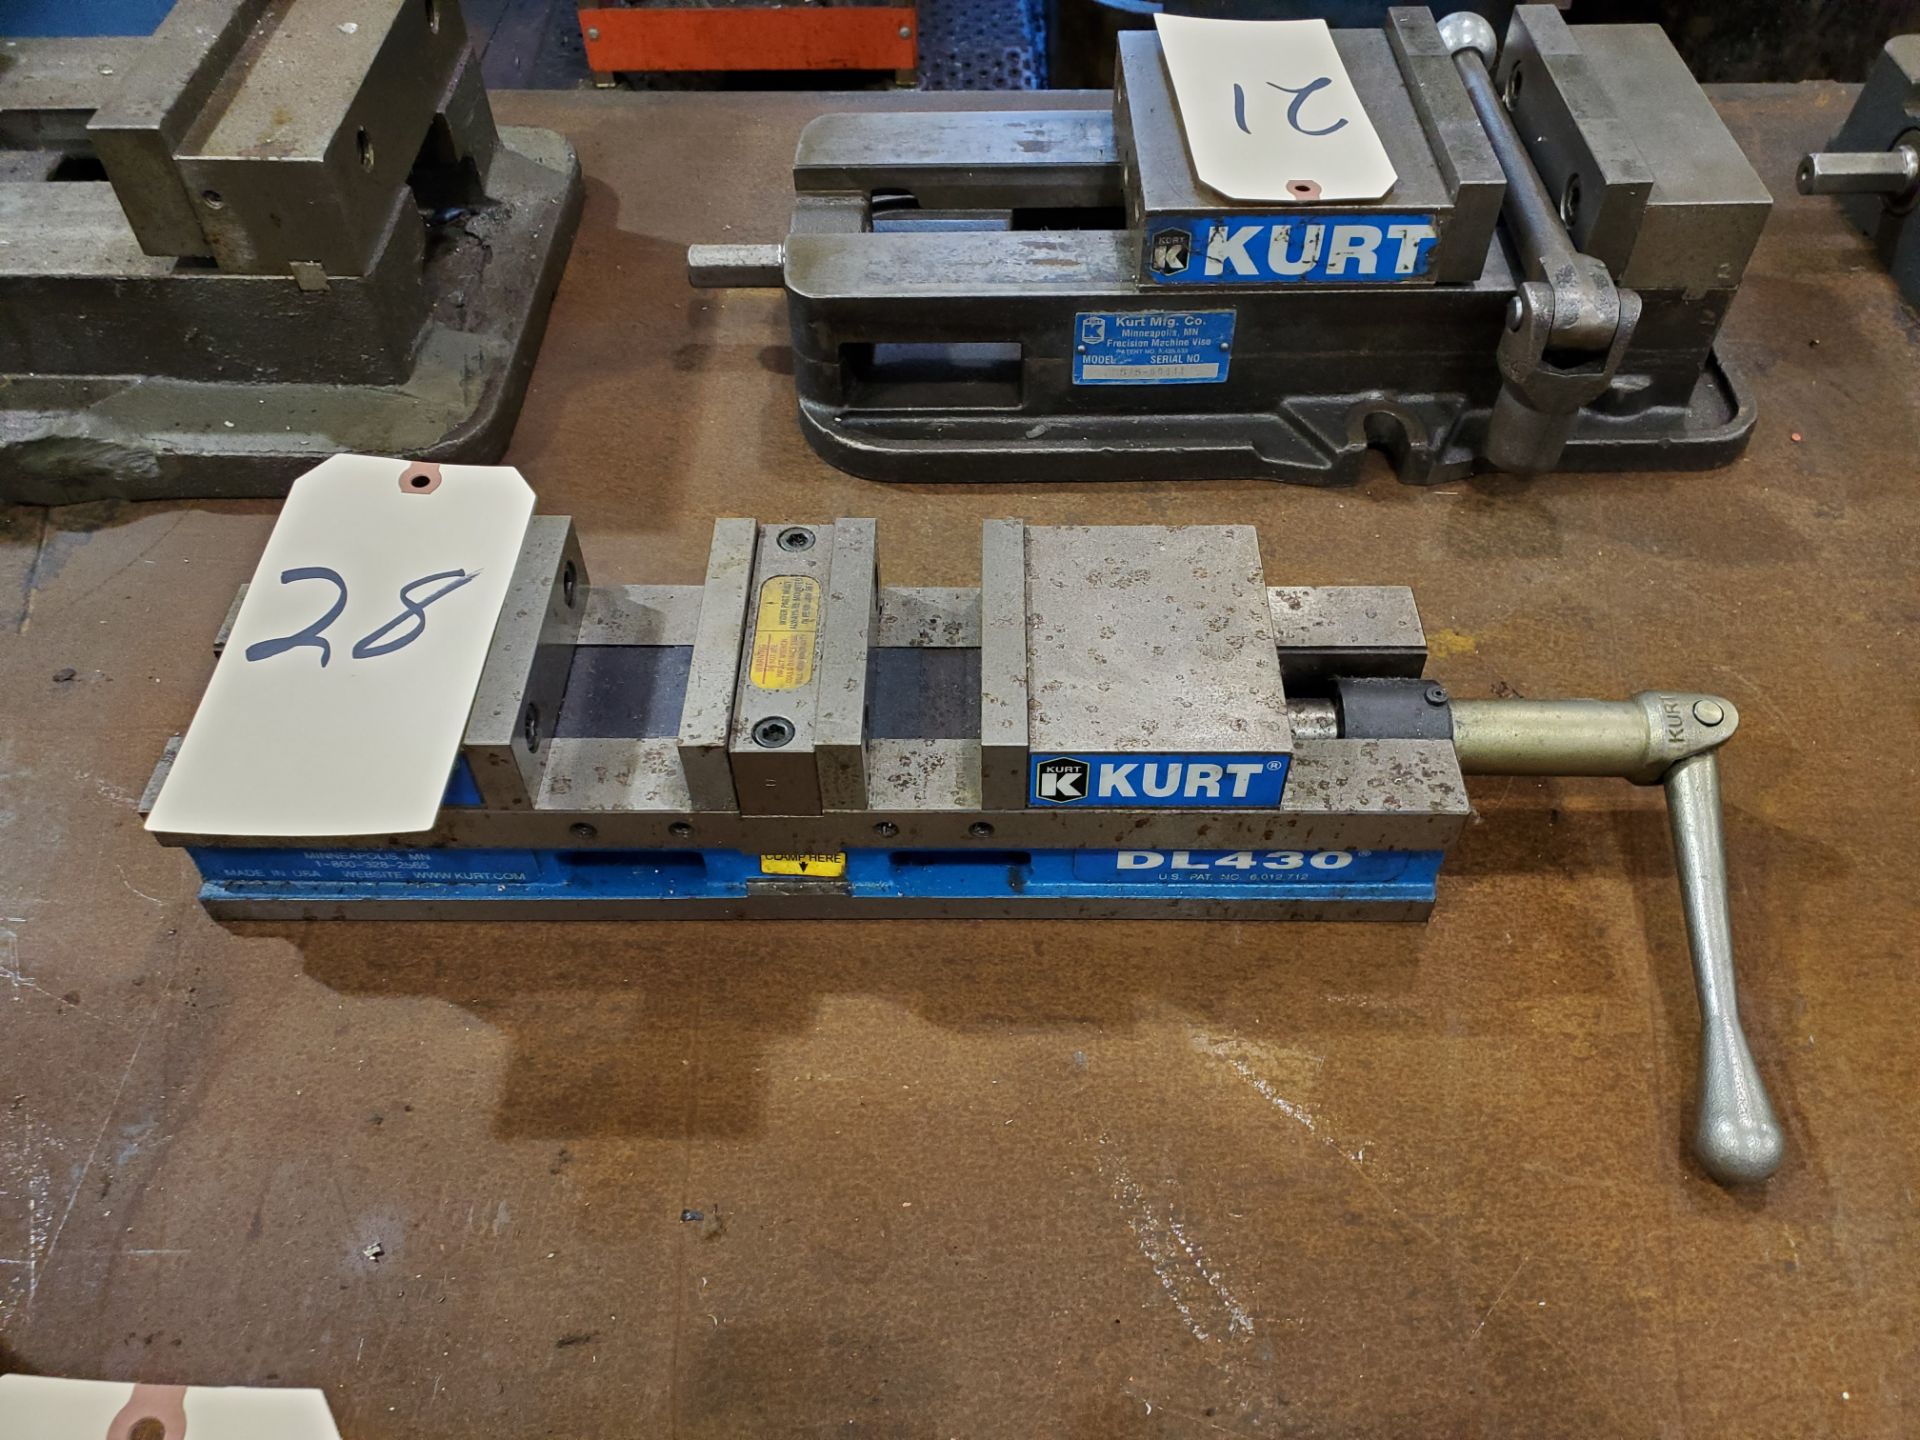 4" Kurt DL430 Double Station Machine Vise